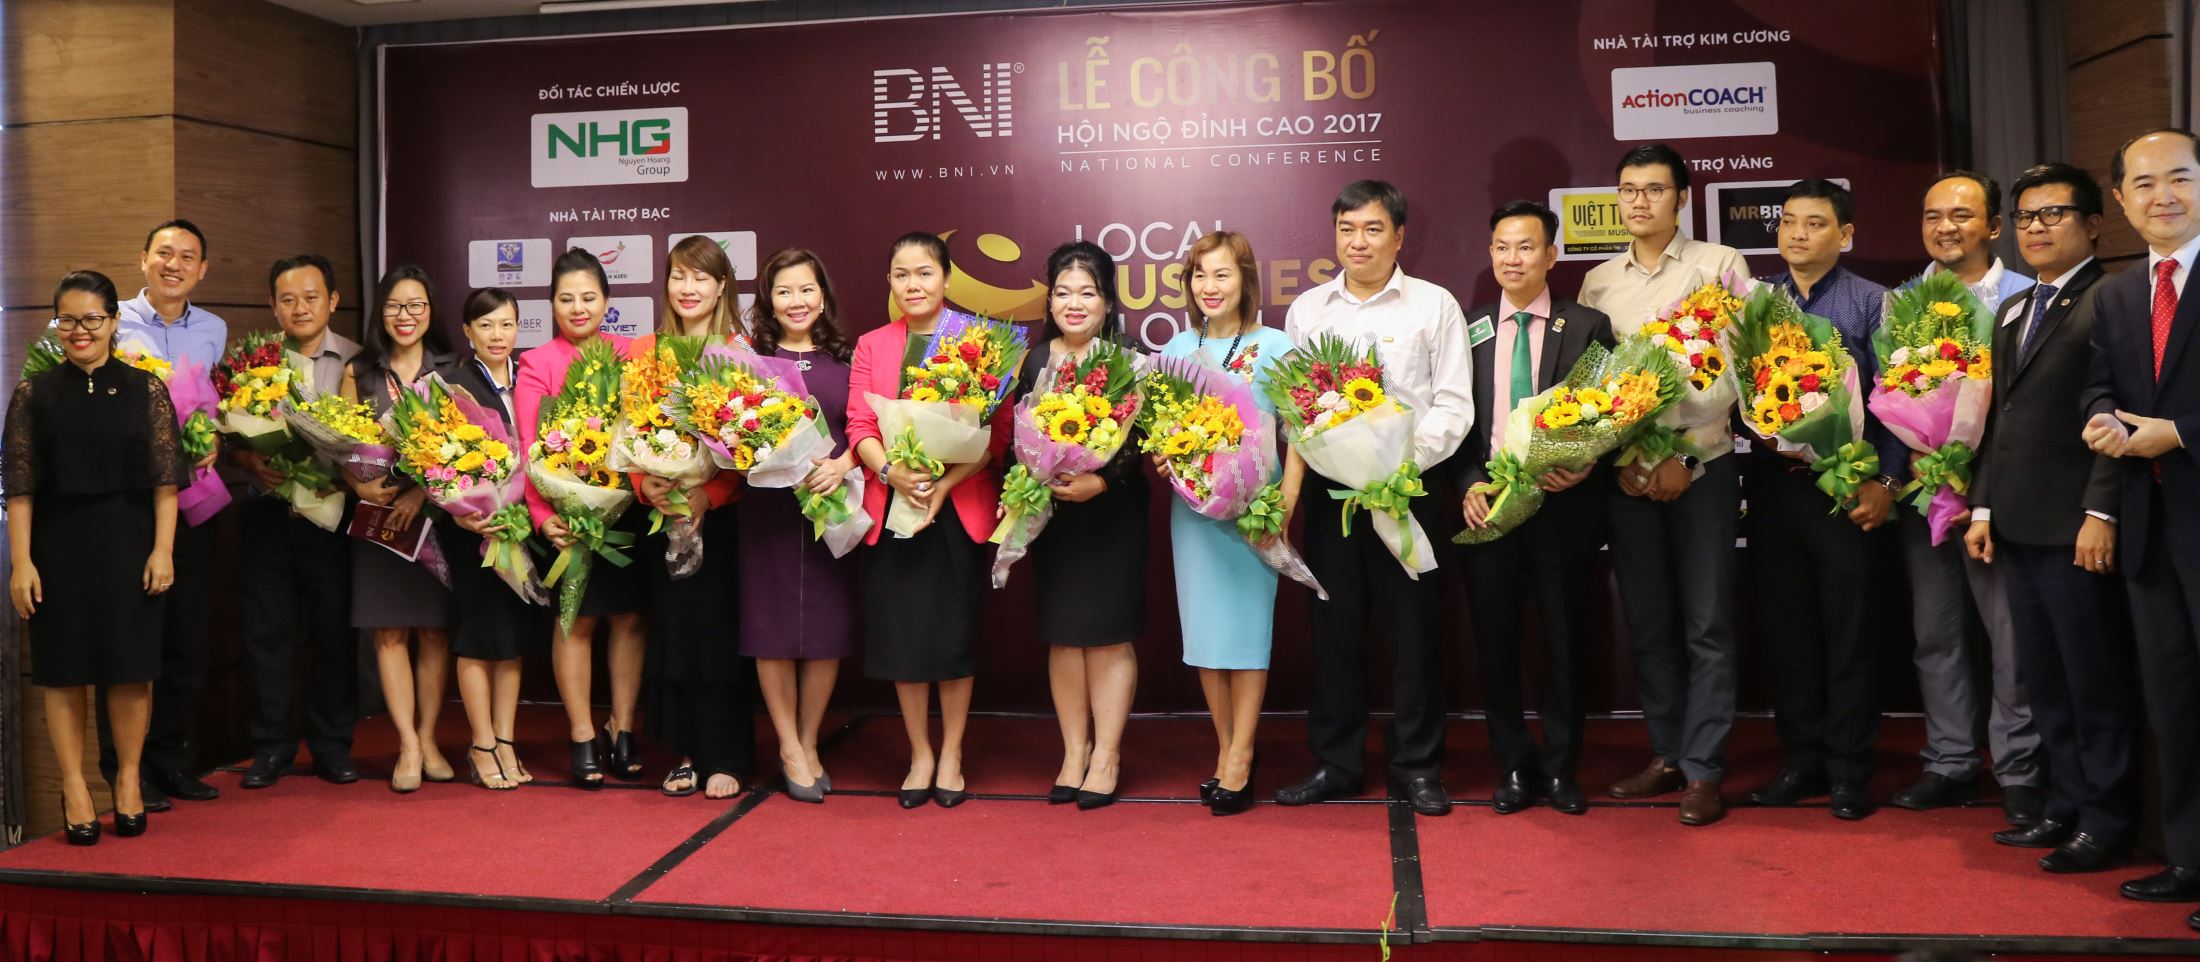 Mr. Ho Quang Minh, Chairman of BNI Vietnam (left), Ms. Hoang Nguyen Thu Thao, CEO of  NHG and Mr. Nguyen Kien Tri, Vice President of BNI Vietnam at the even.